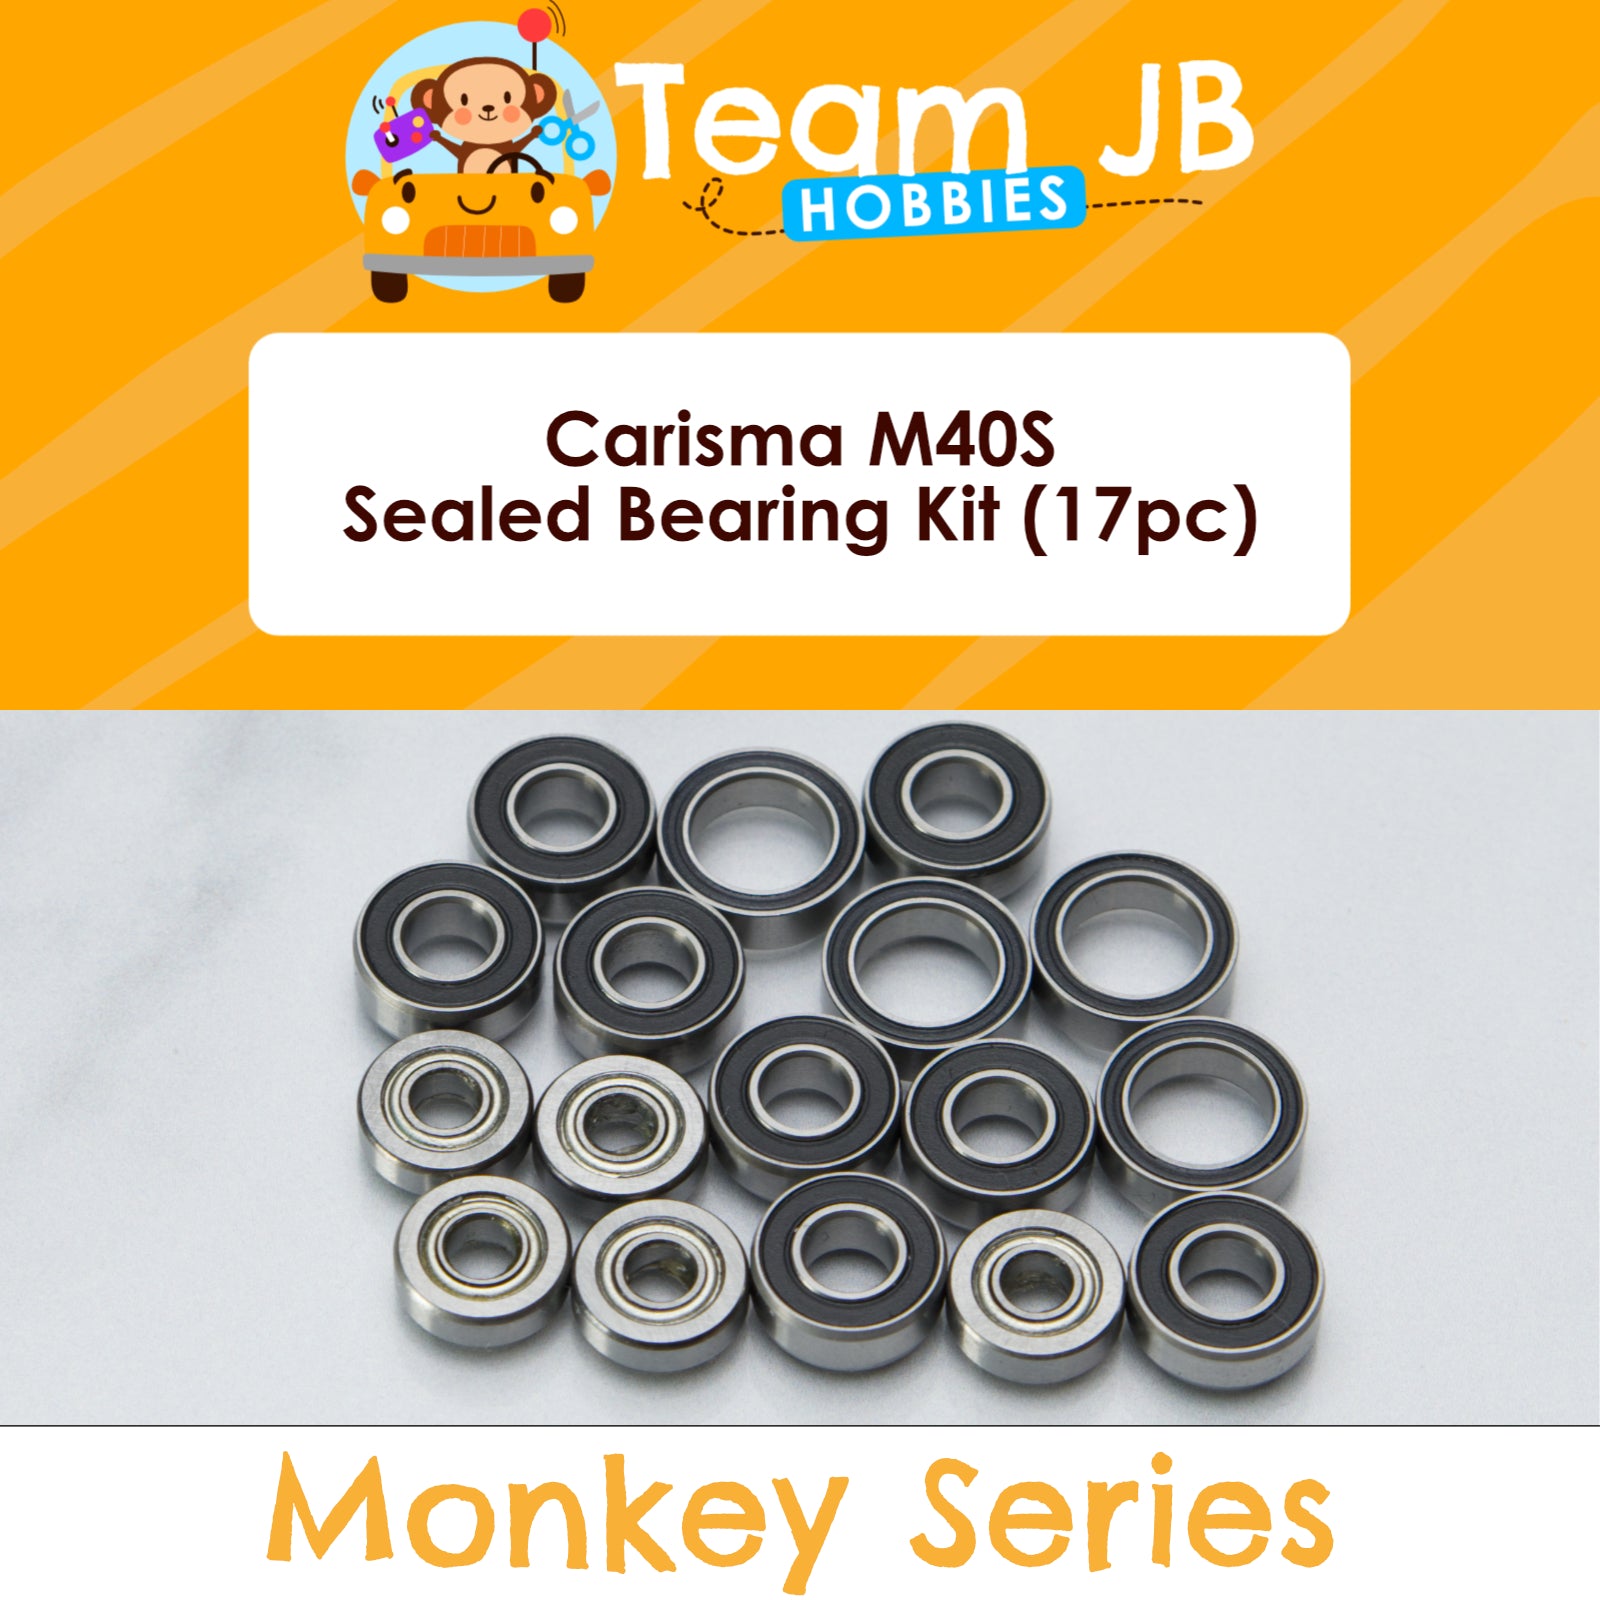 Carisma M40S - Sealed Bearing Kit